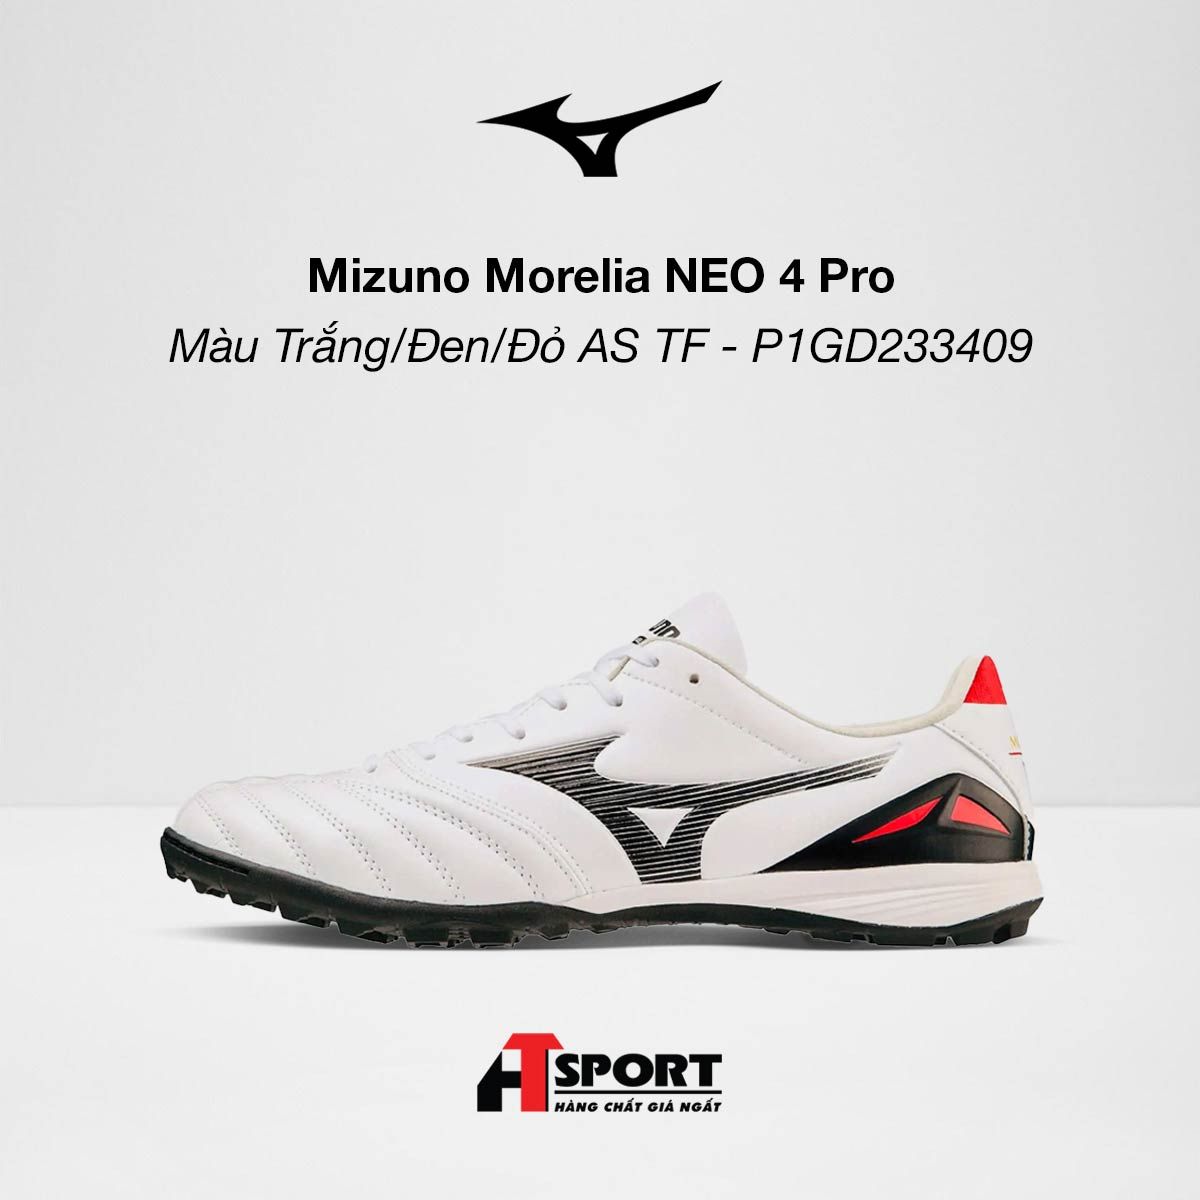  Mizuno Morelia Neo 4 IV Pro Màu Trắng/Đen/Đỏ AS TF - P1GD233409 